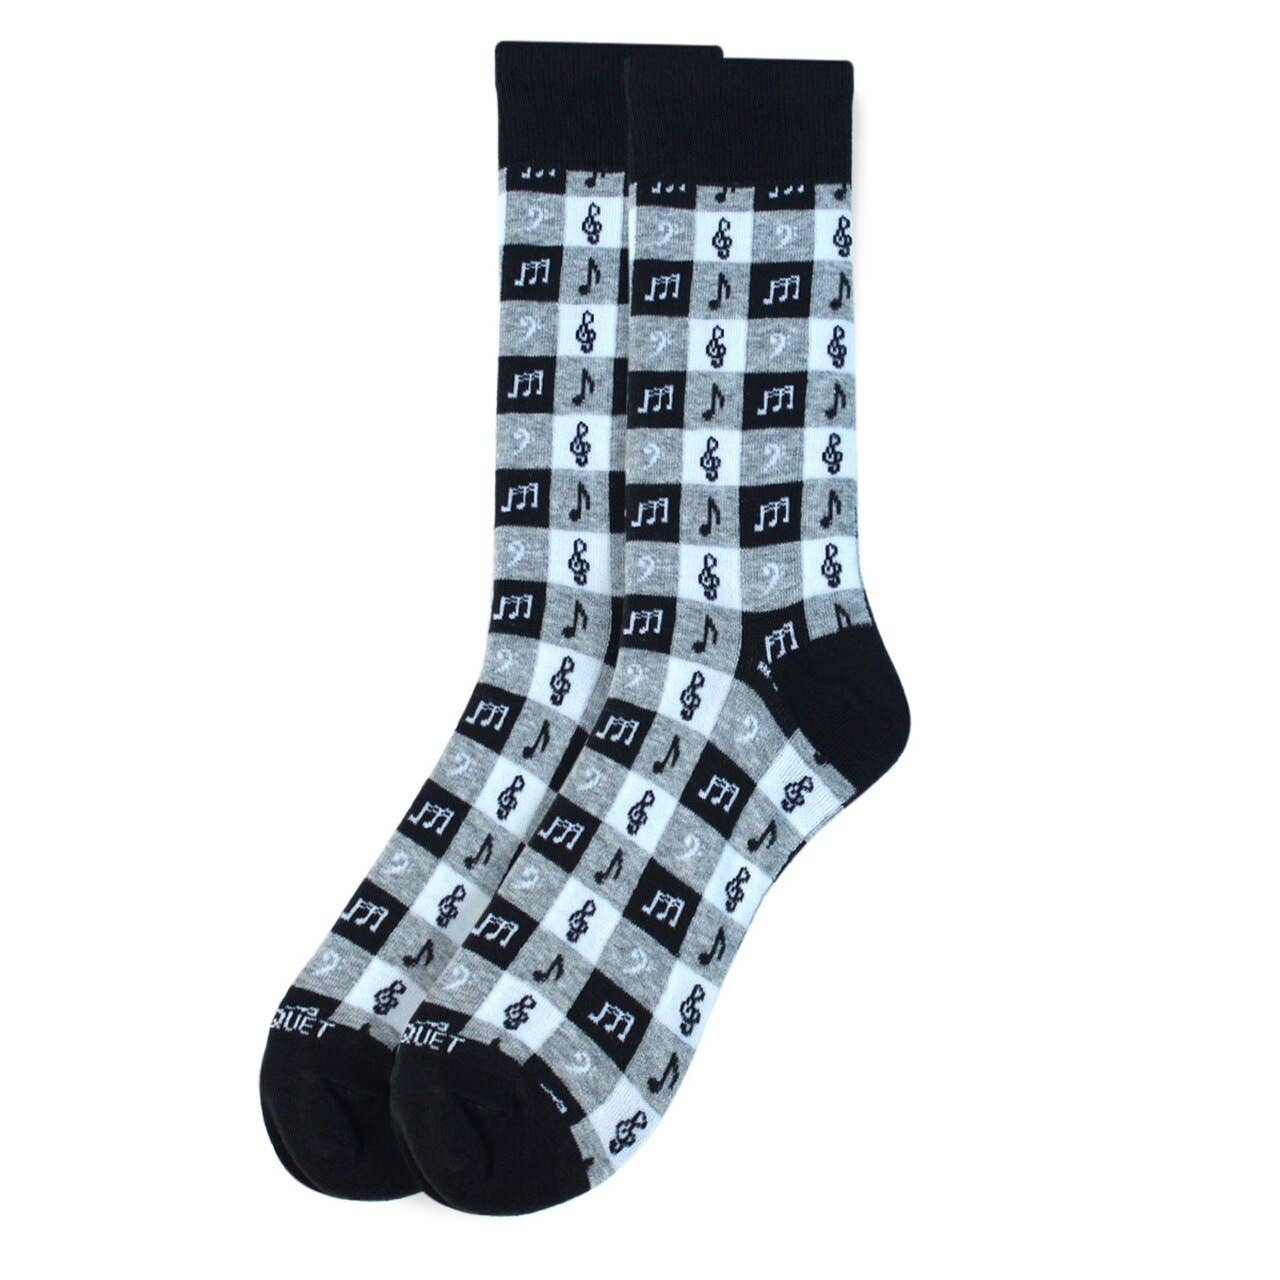 Parquet - Music Notes Novelty Socks for Men